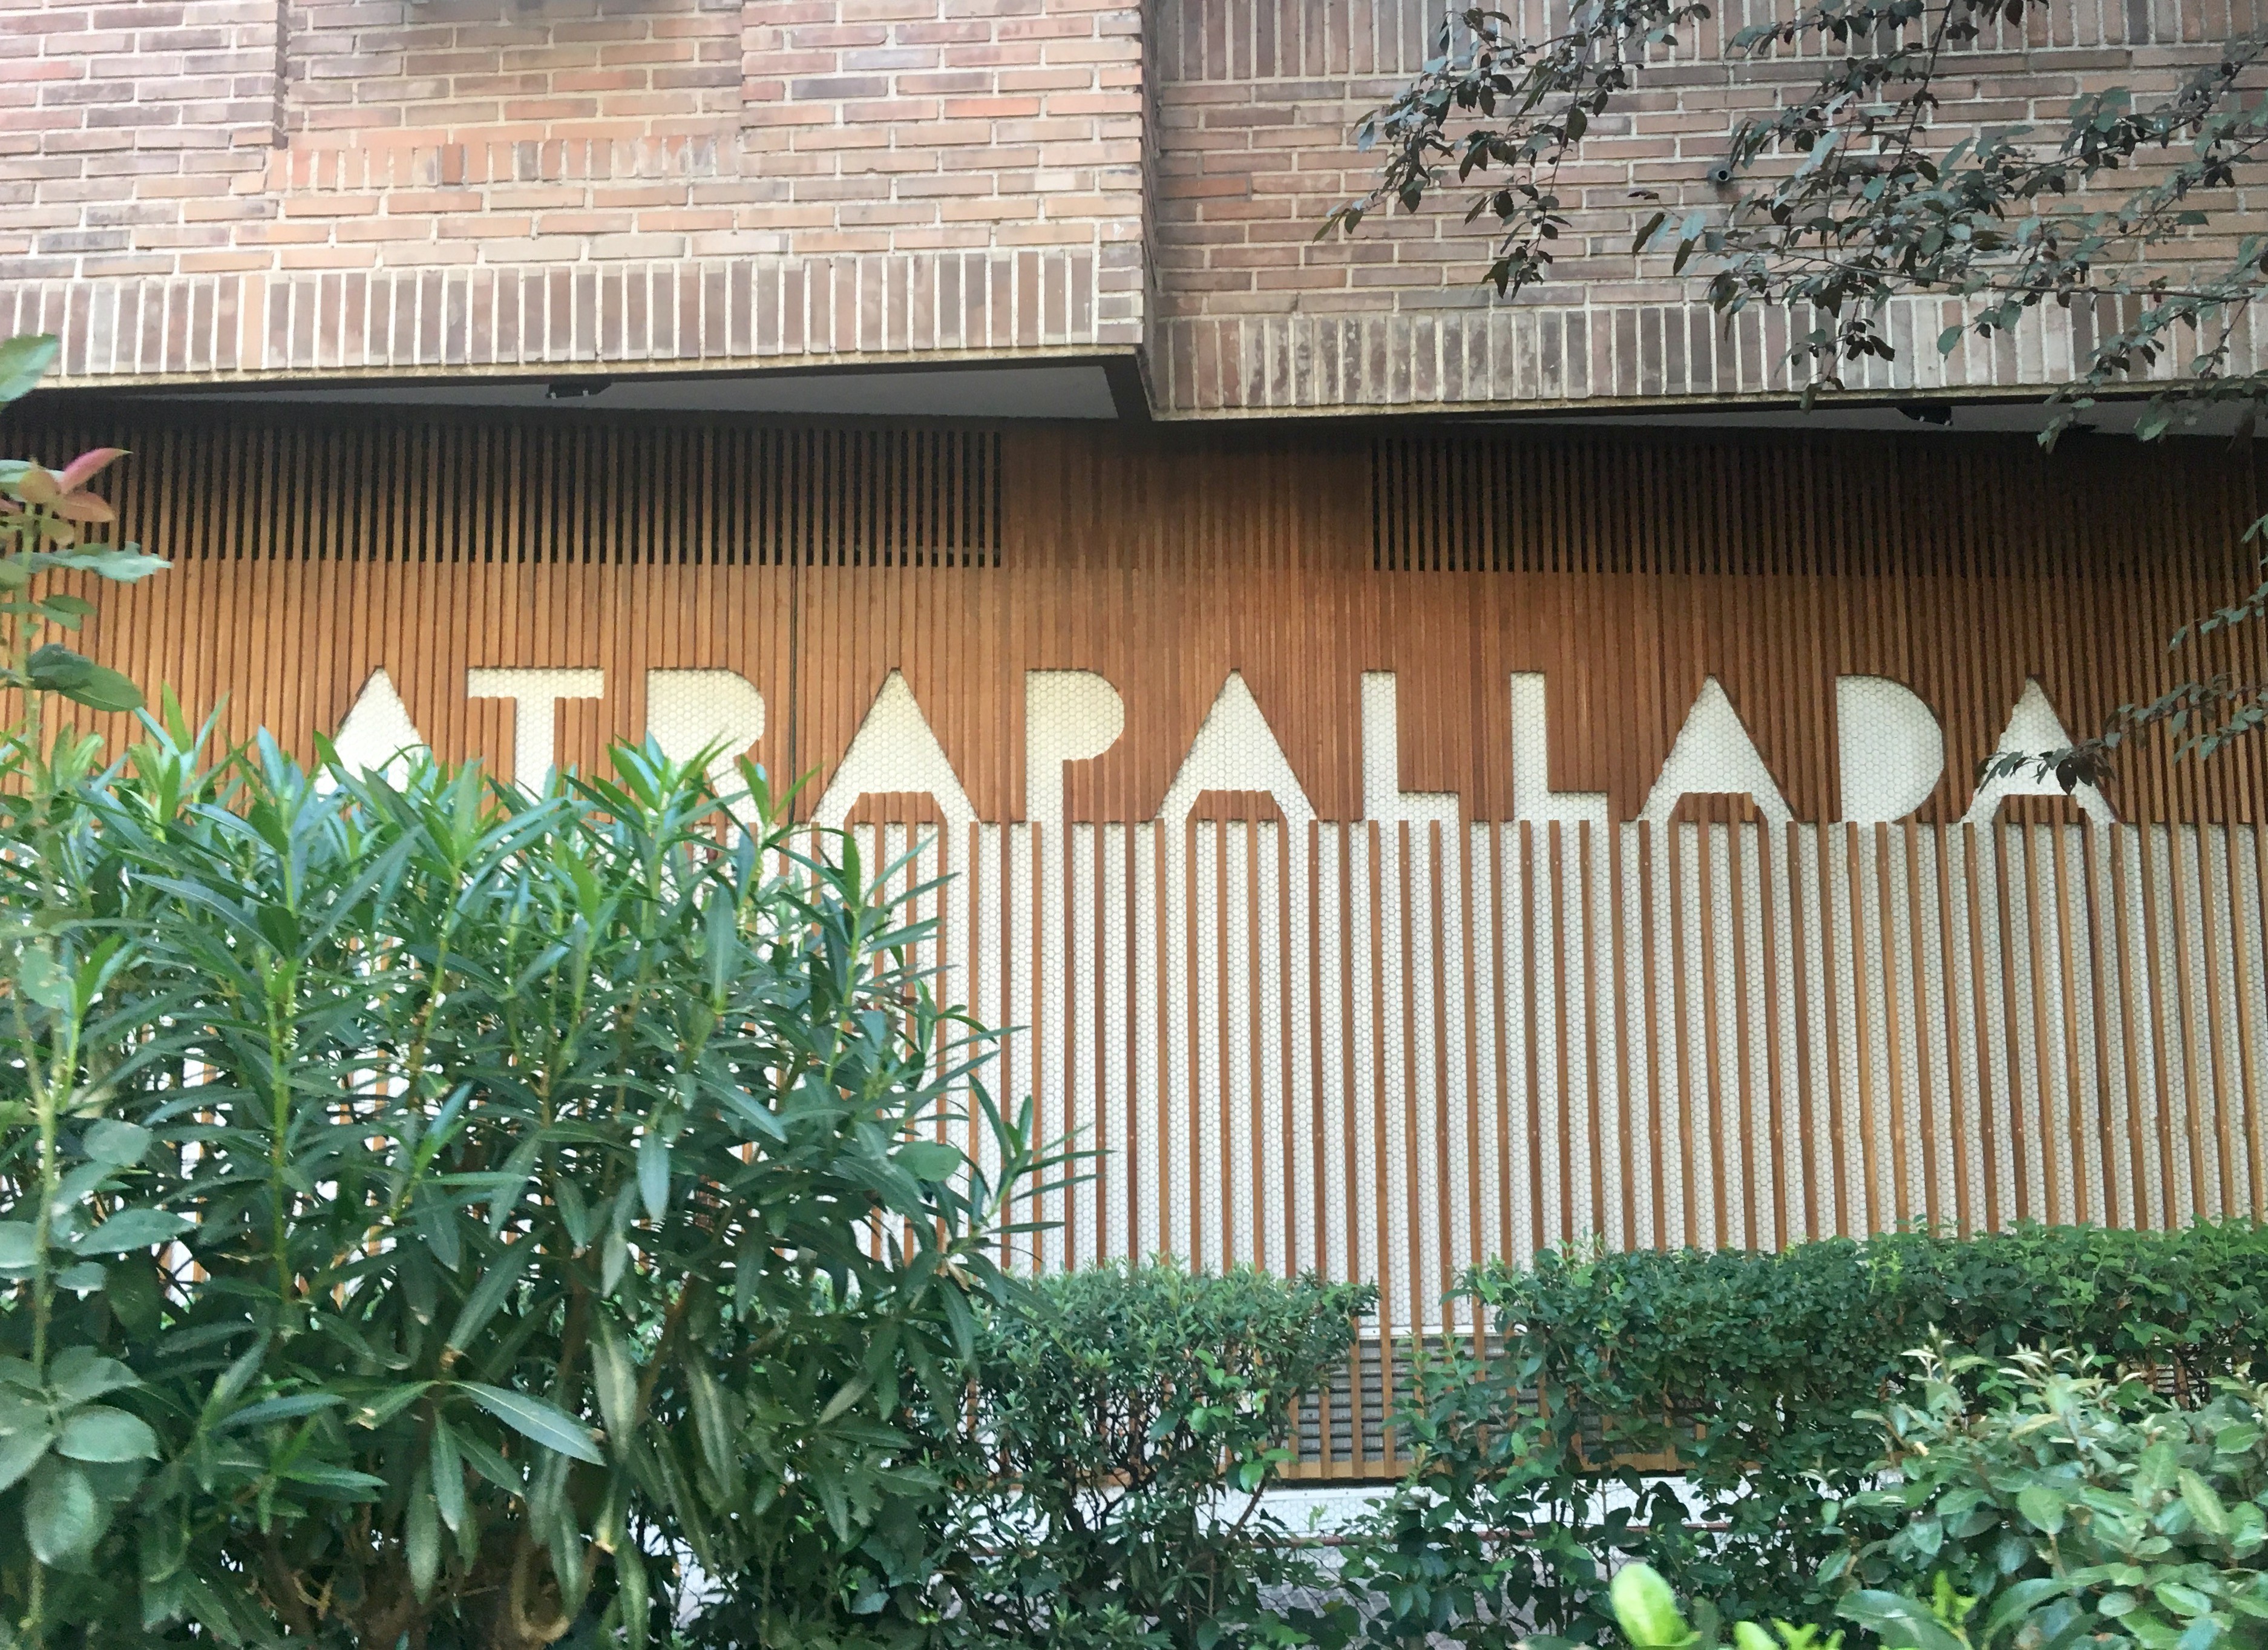 Atrapallada, Restaurant, Madrid, Spain